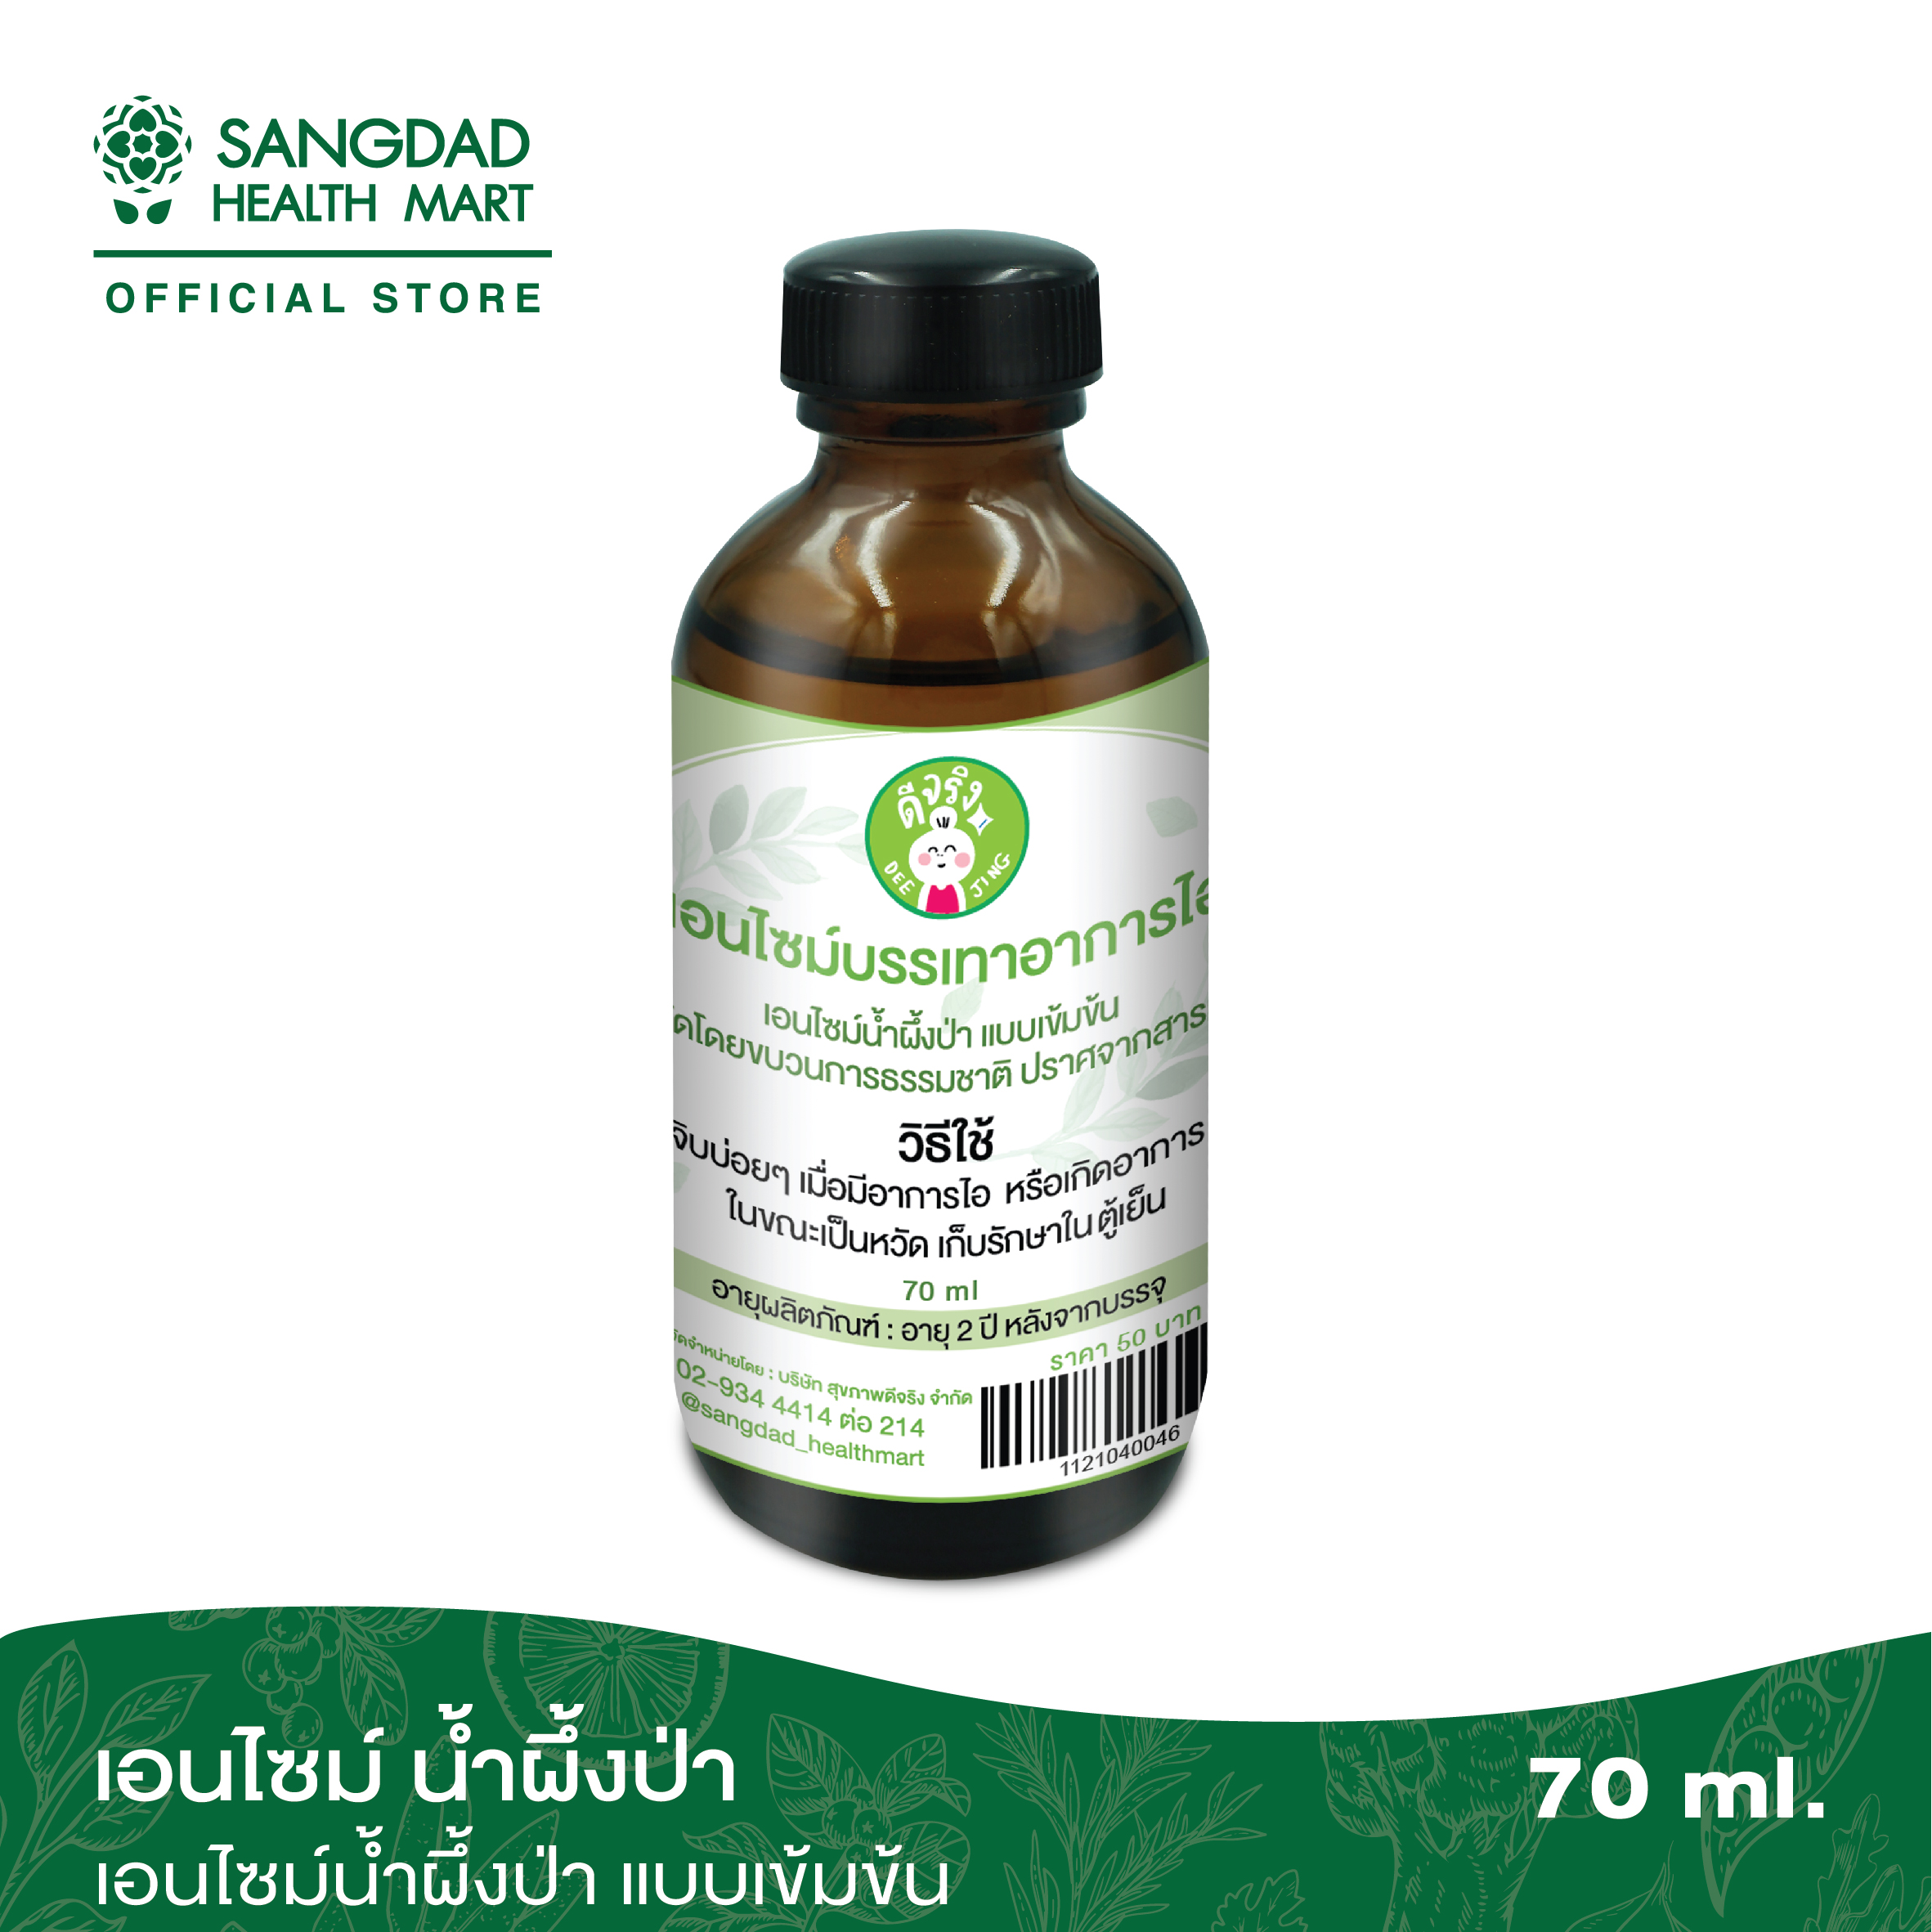 Sangdad Health Mart : เอนไซม์(แก้ไอ) 150 ml By:ป้านิด|สินค้าดีจริง #สุขภาพดีมีไว้แบ่งปัน